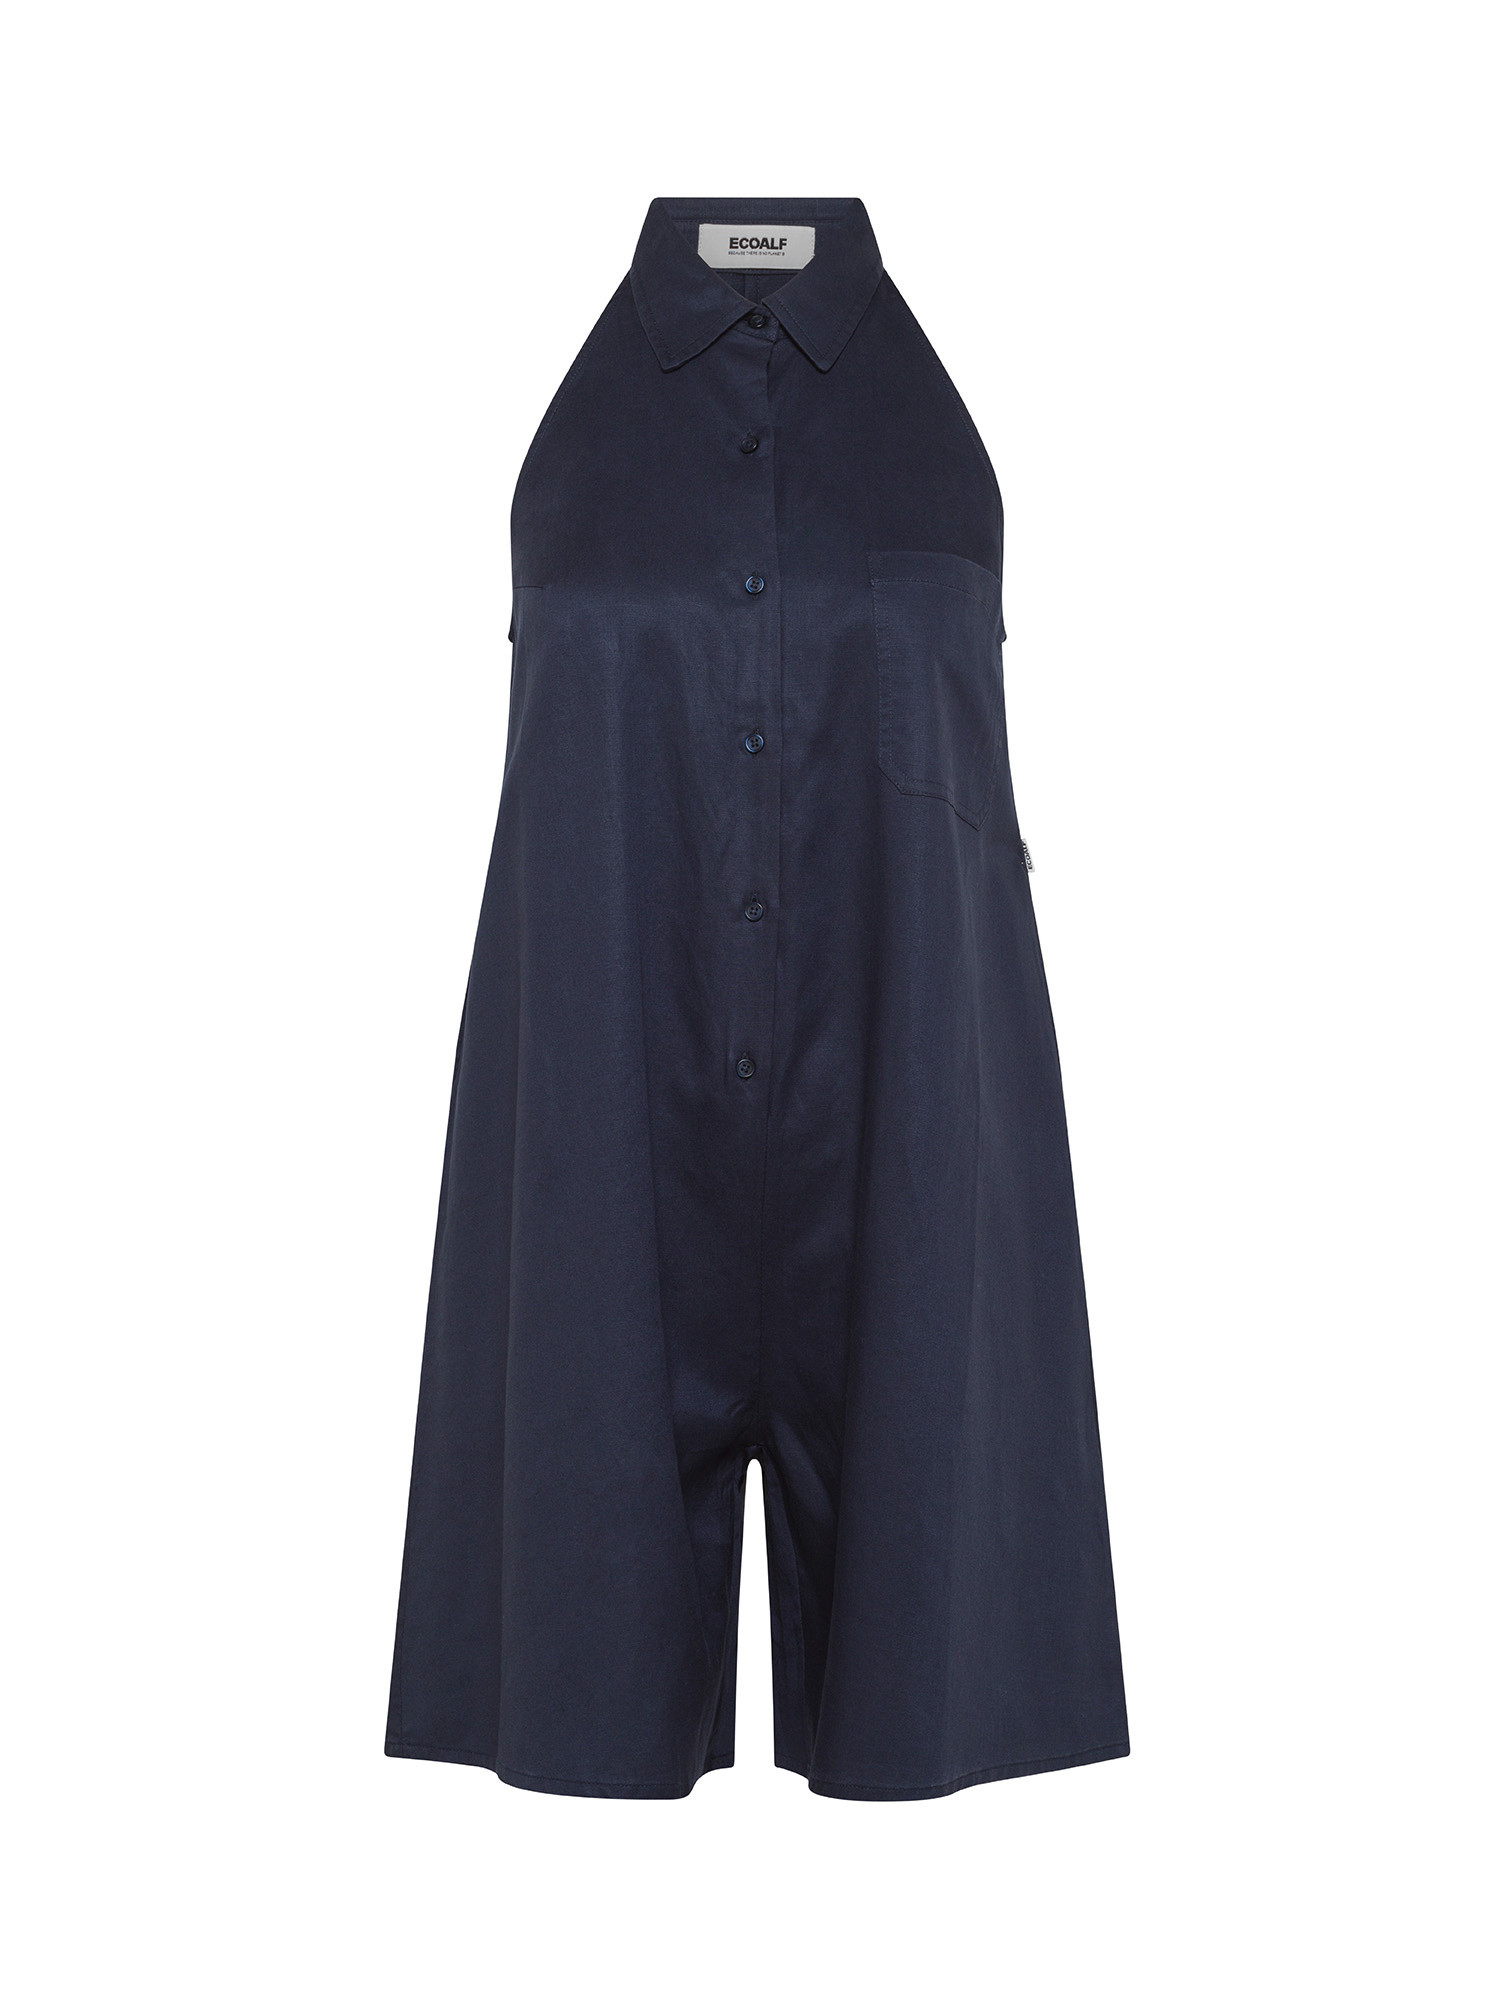 Ecoalf - Jade sleeveless jumpsuit, Blue, large image number 0